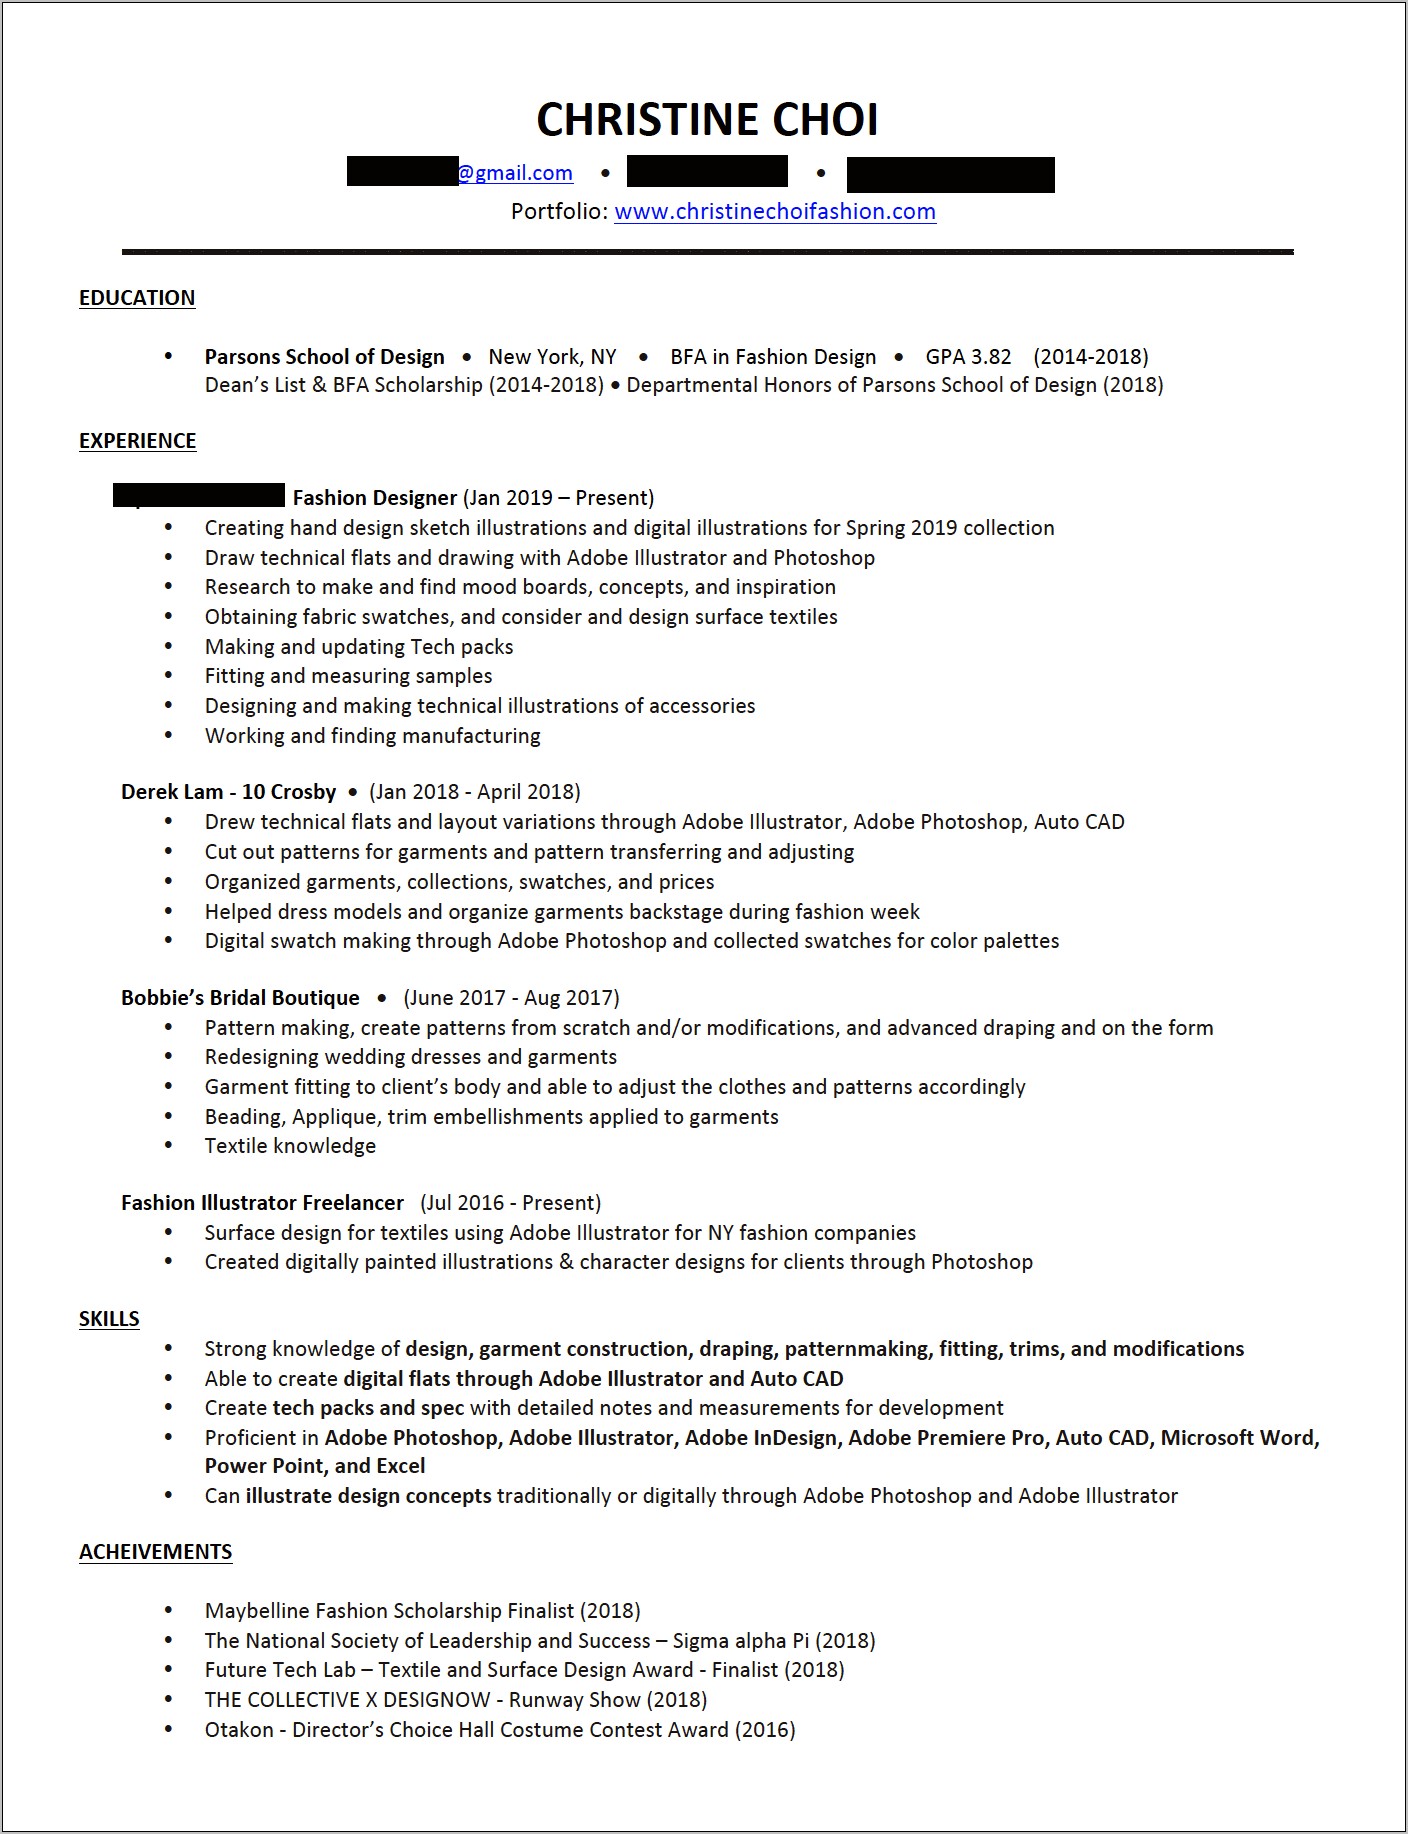 Resume For Job Fashion Reddit